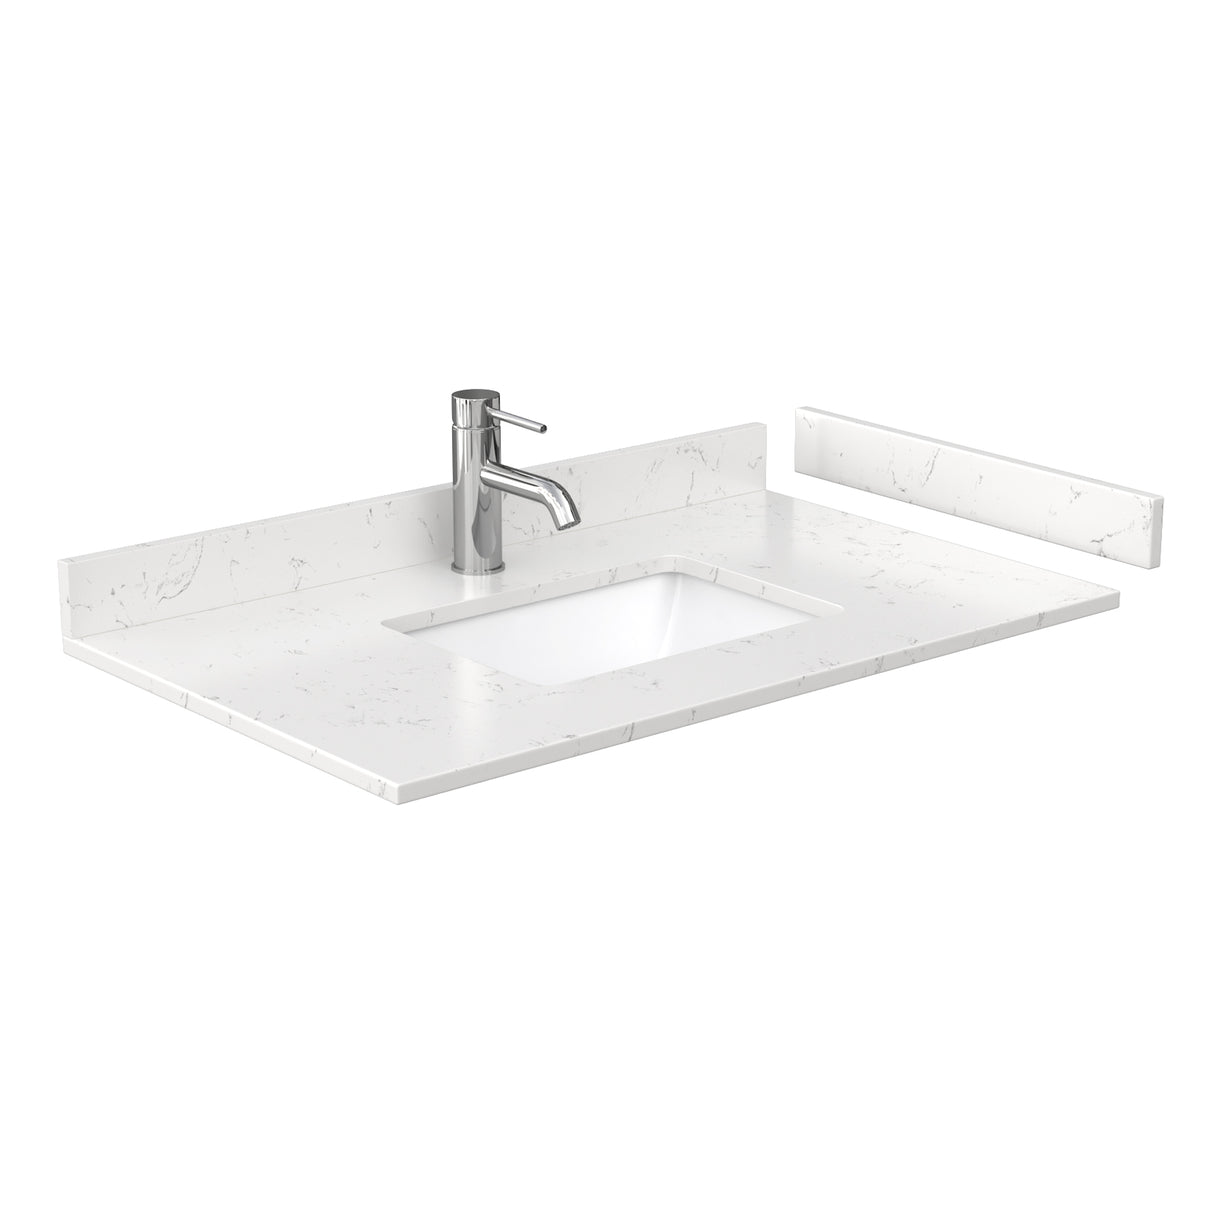 Sheffield 36 Inch Single Bathroom Vanity in White Carrara Cultured Marble Countertop Undermount Square Sink No Mirror